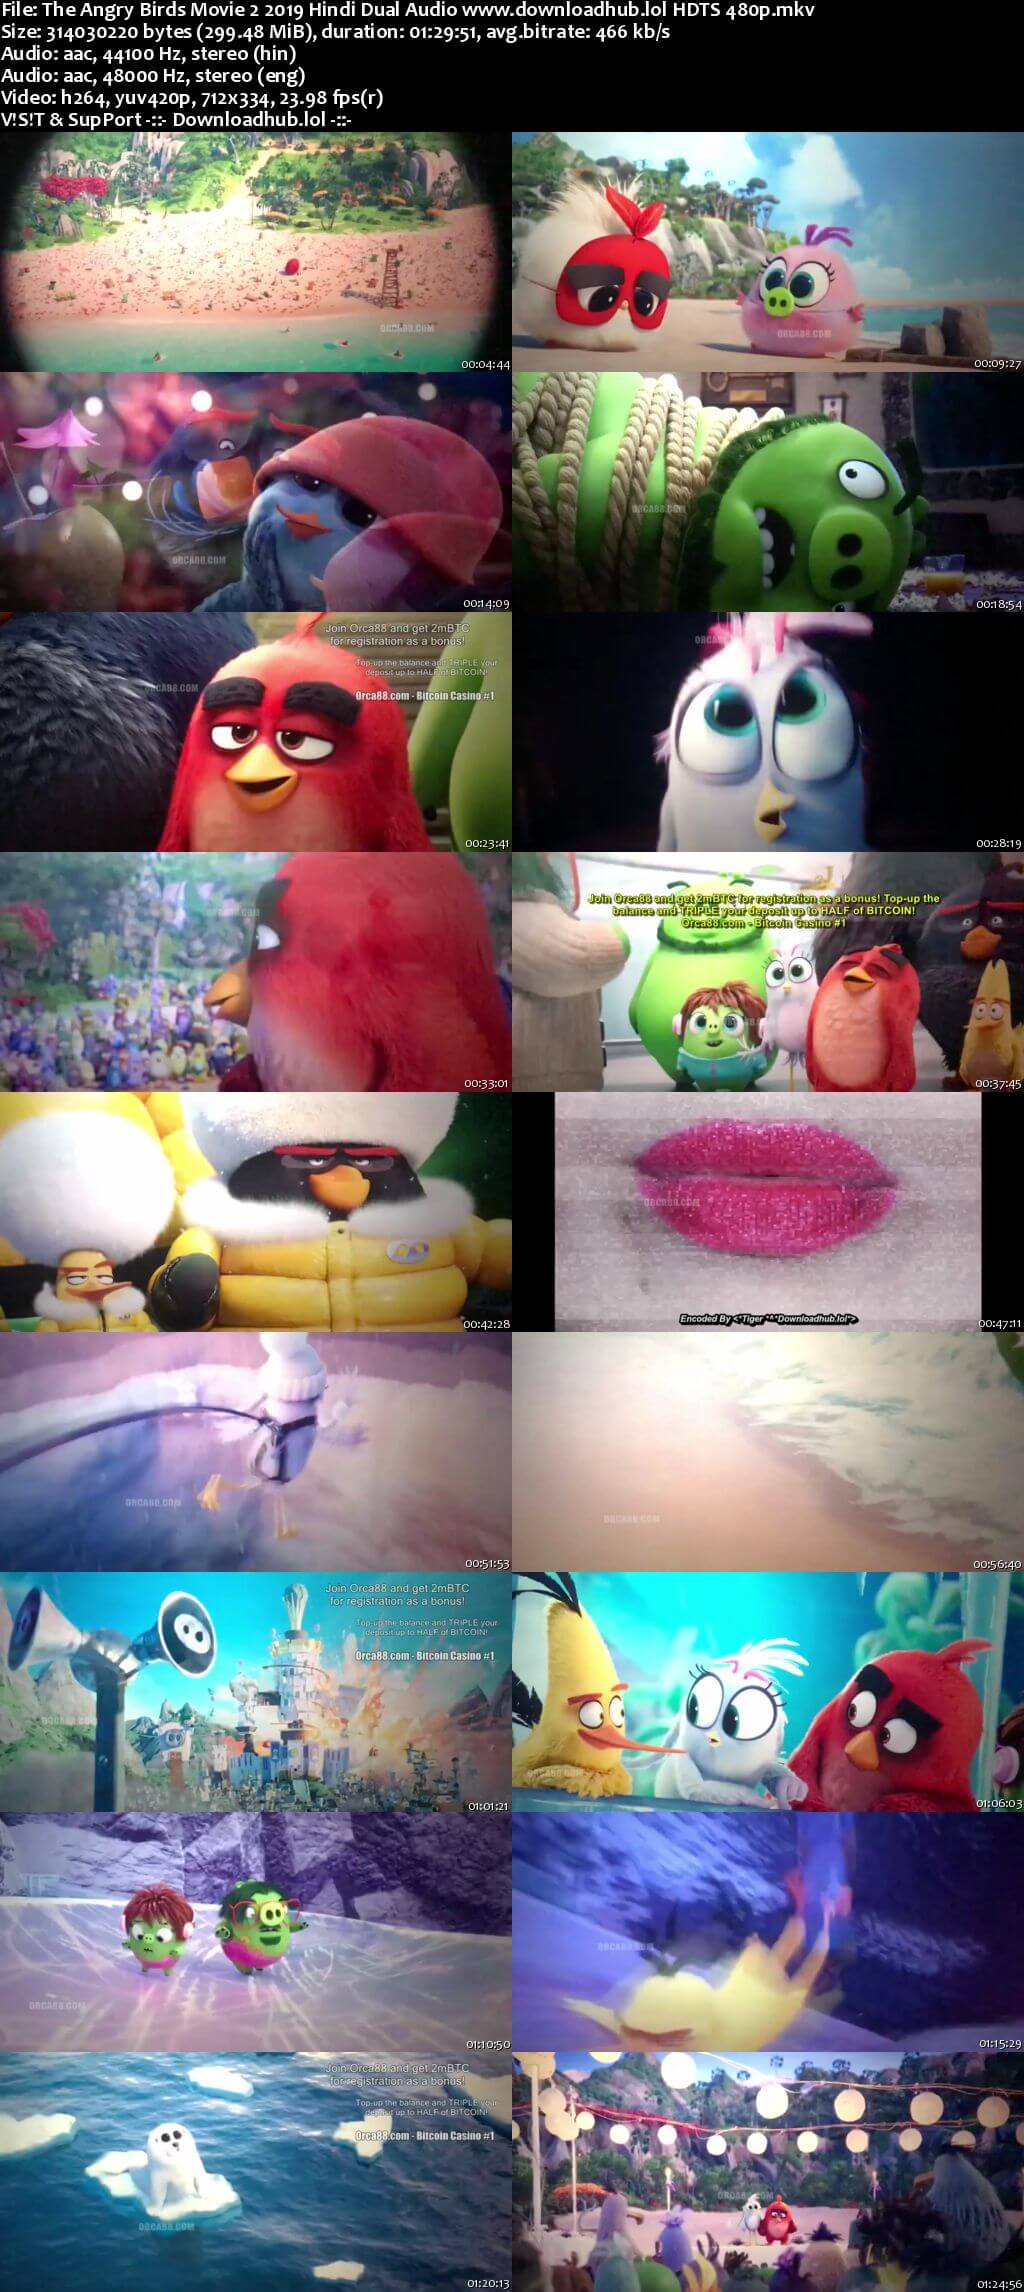 The Angry Birds Movie 2 2019 Hindi Dual Audio 300MB HDTS 480p